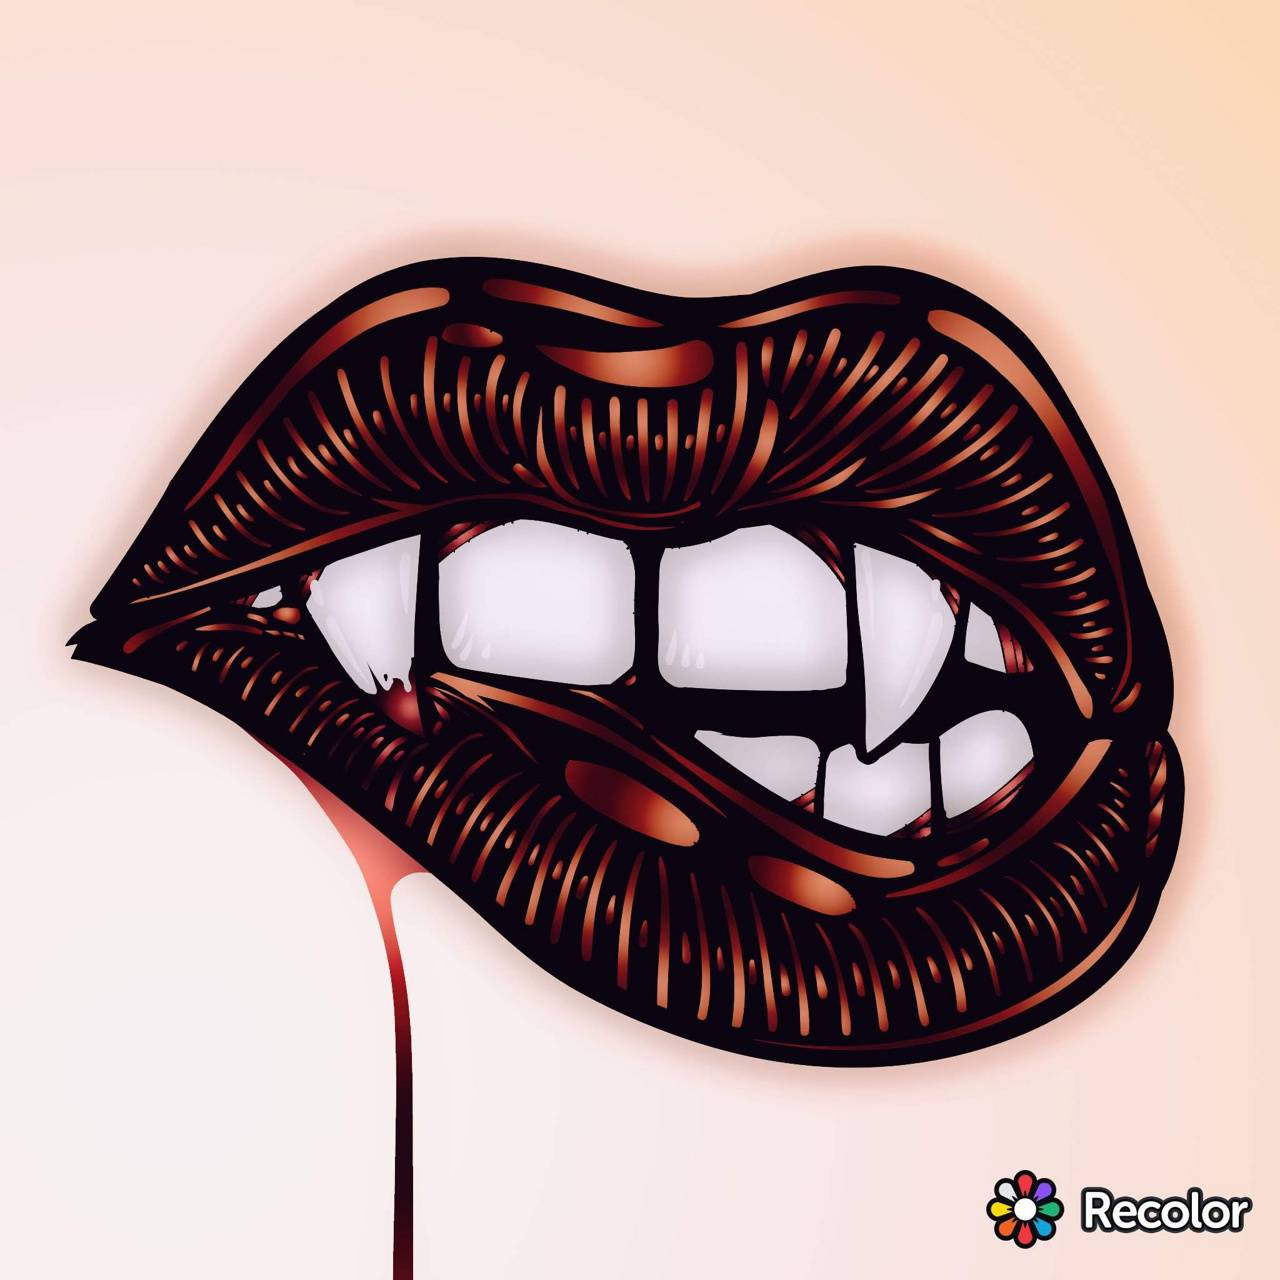 Vampire Lips Wallpaper Free Vampire Lips Background